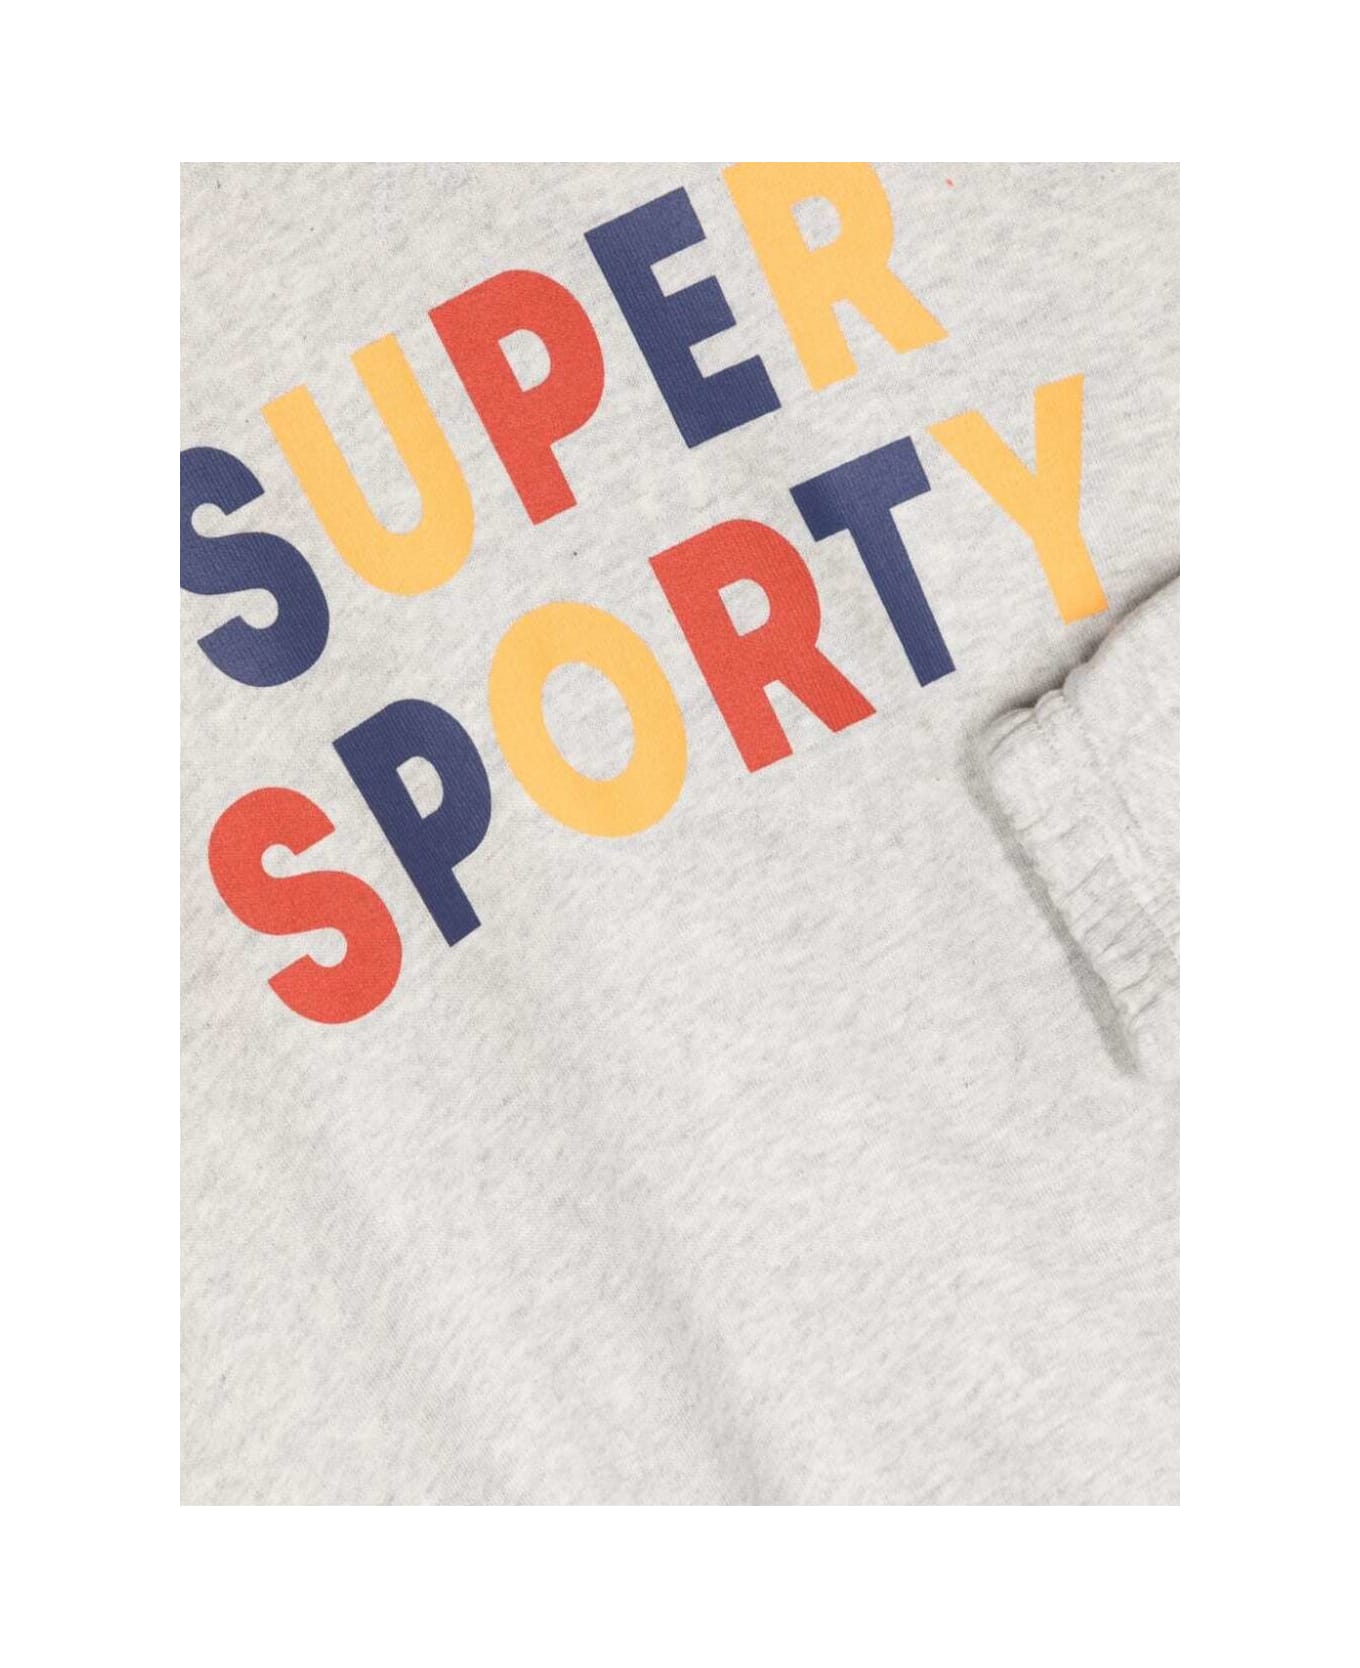 Mini Rodini Super Sporty Sweatshirt - Grey